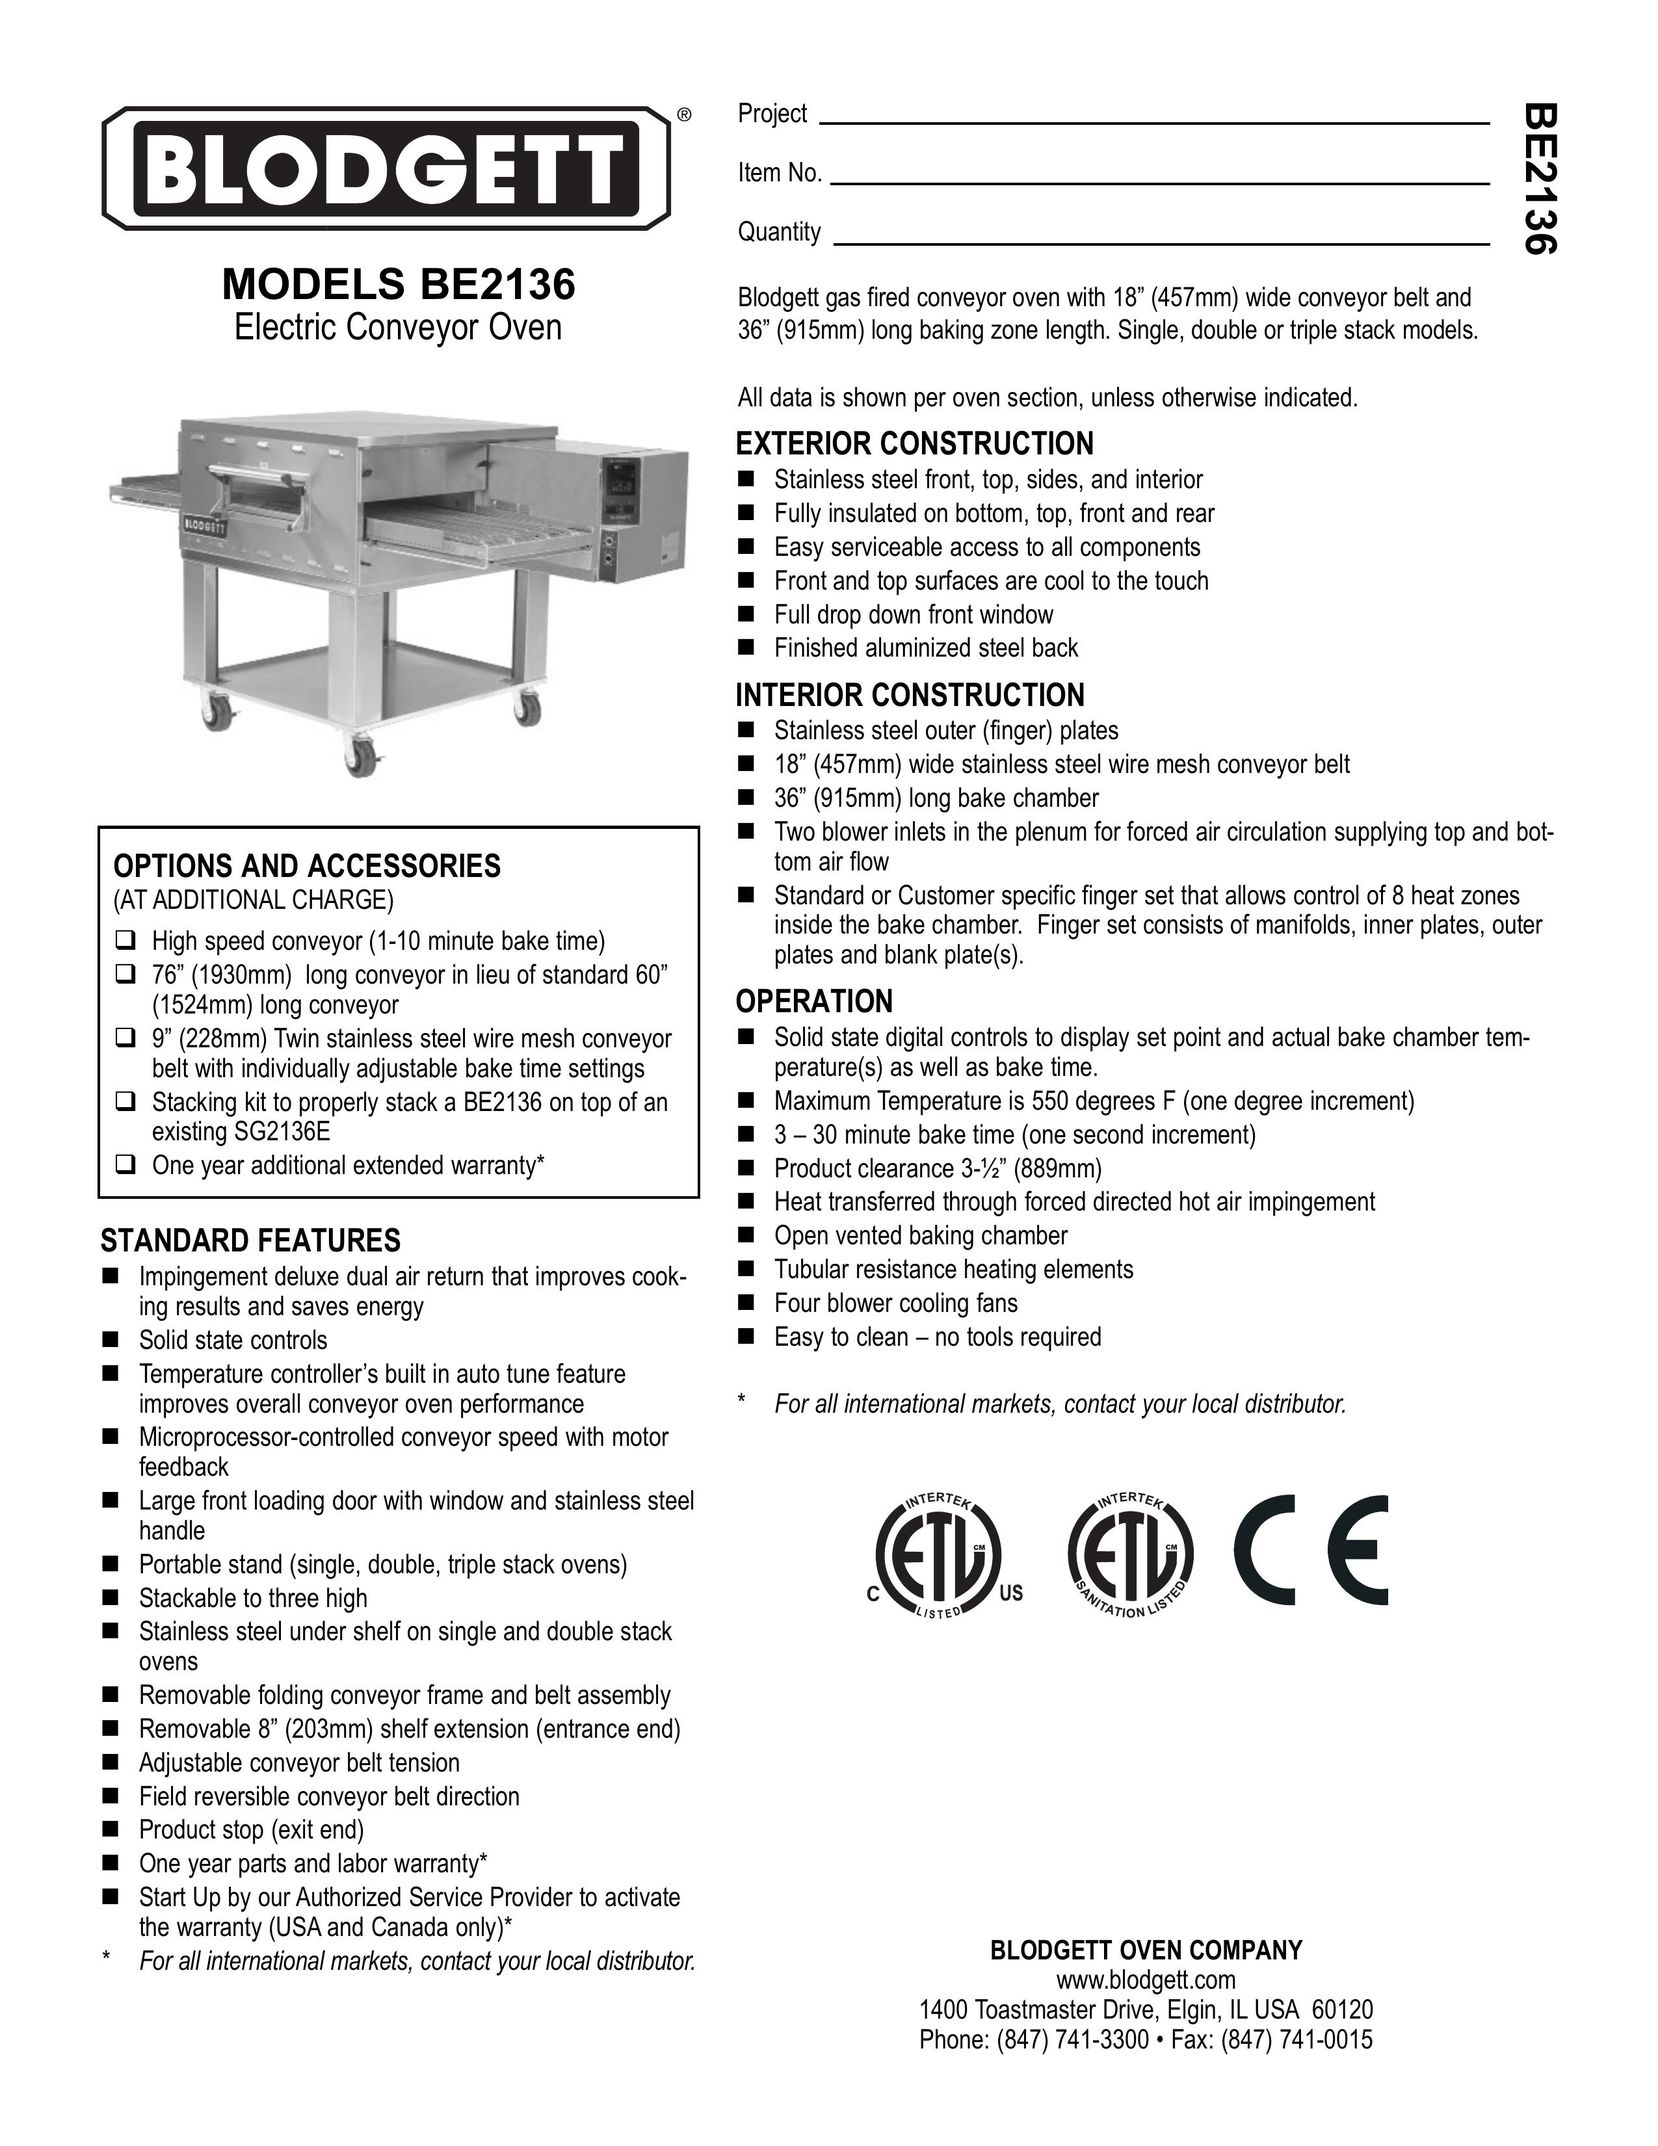 Blodgett BE2136 Oven User Manual